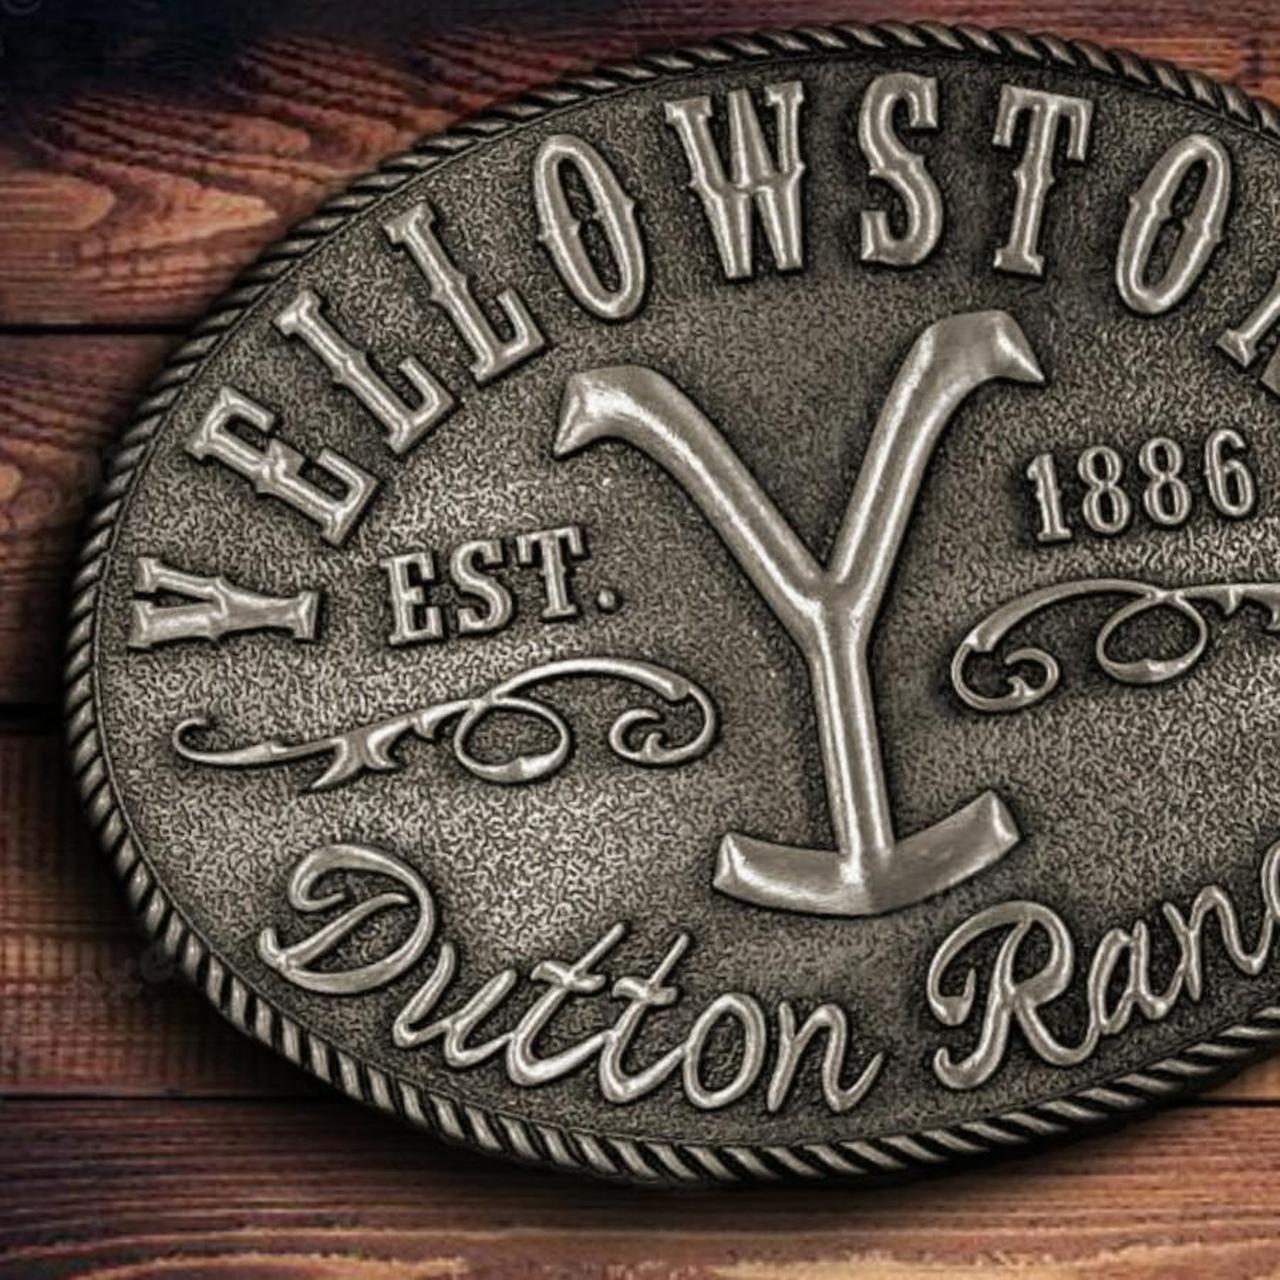 Yellowstone TV Series Dutton Ranch Men's Heavy Duty Belt Buckle